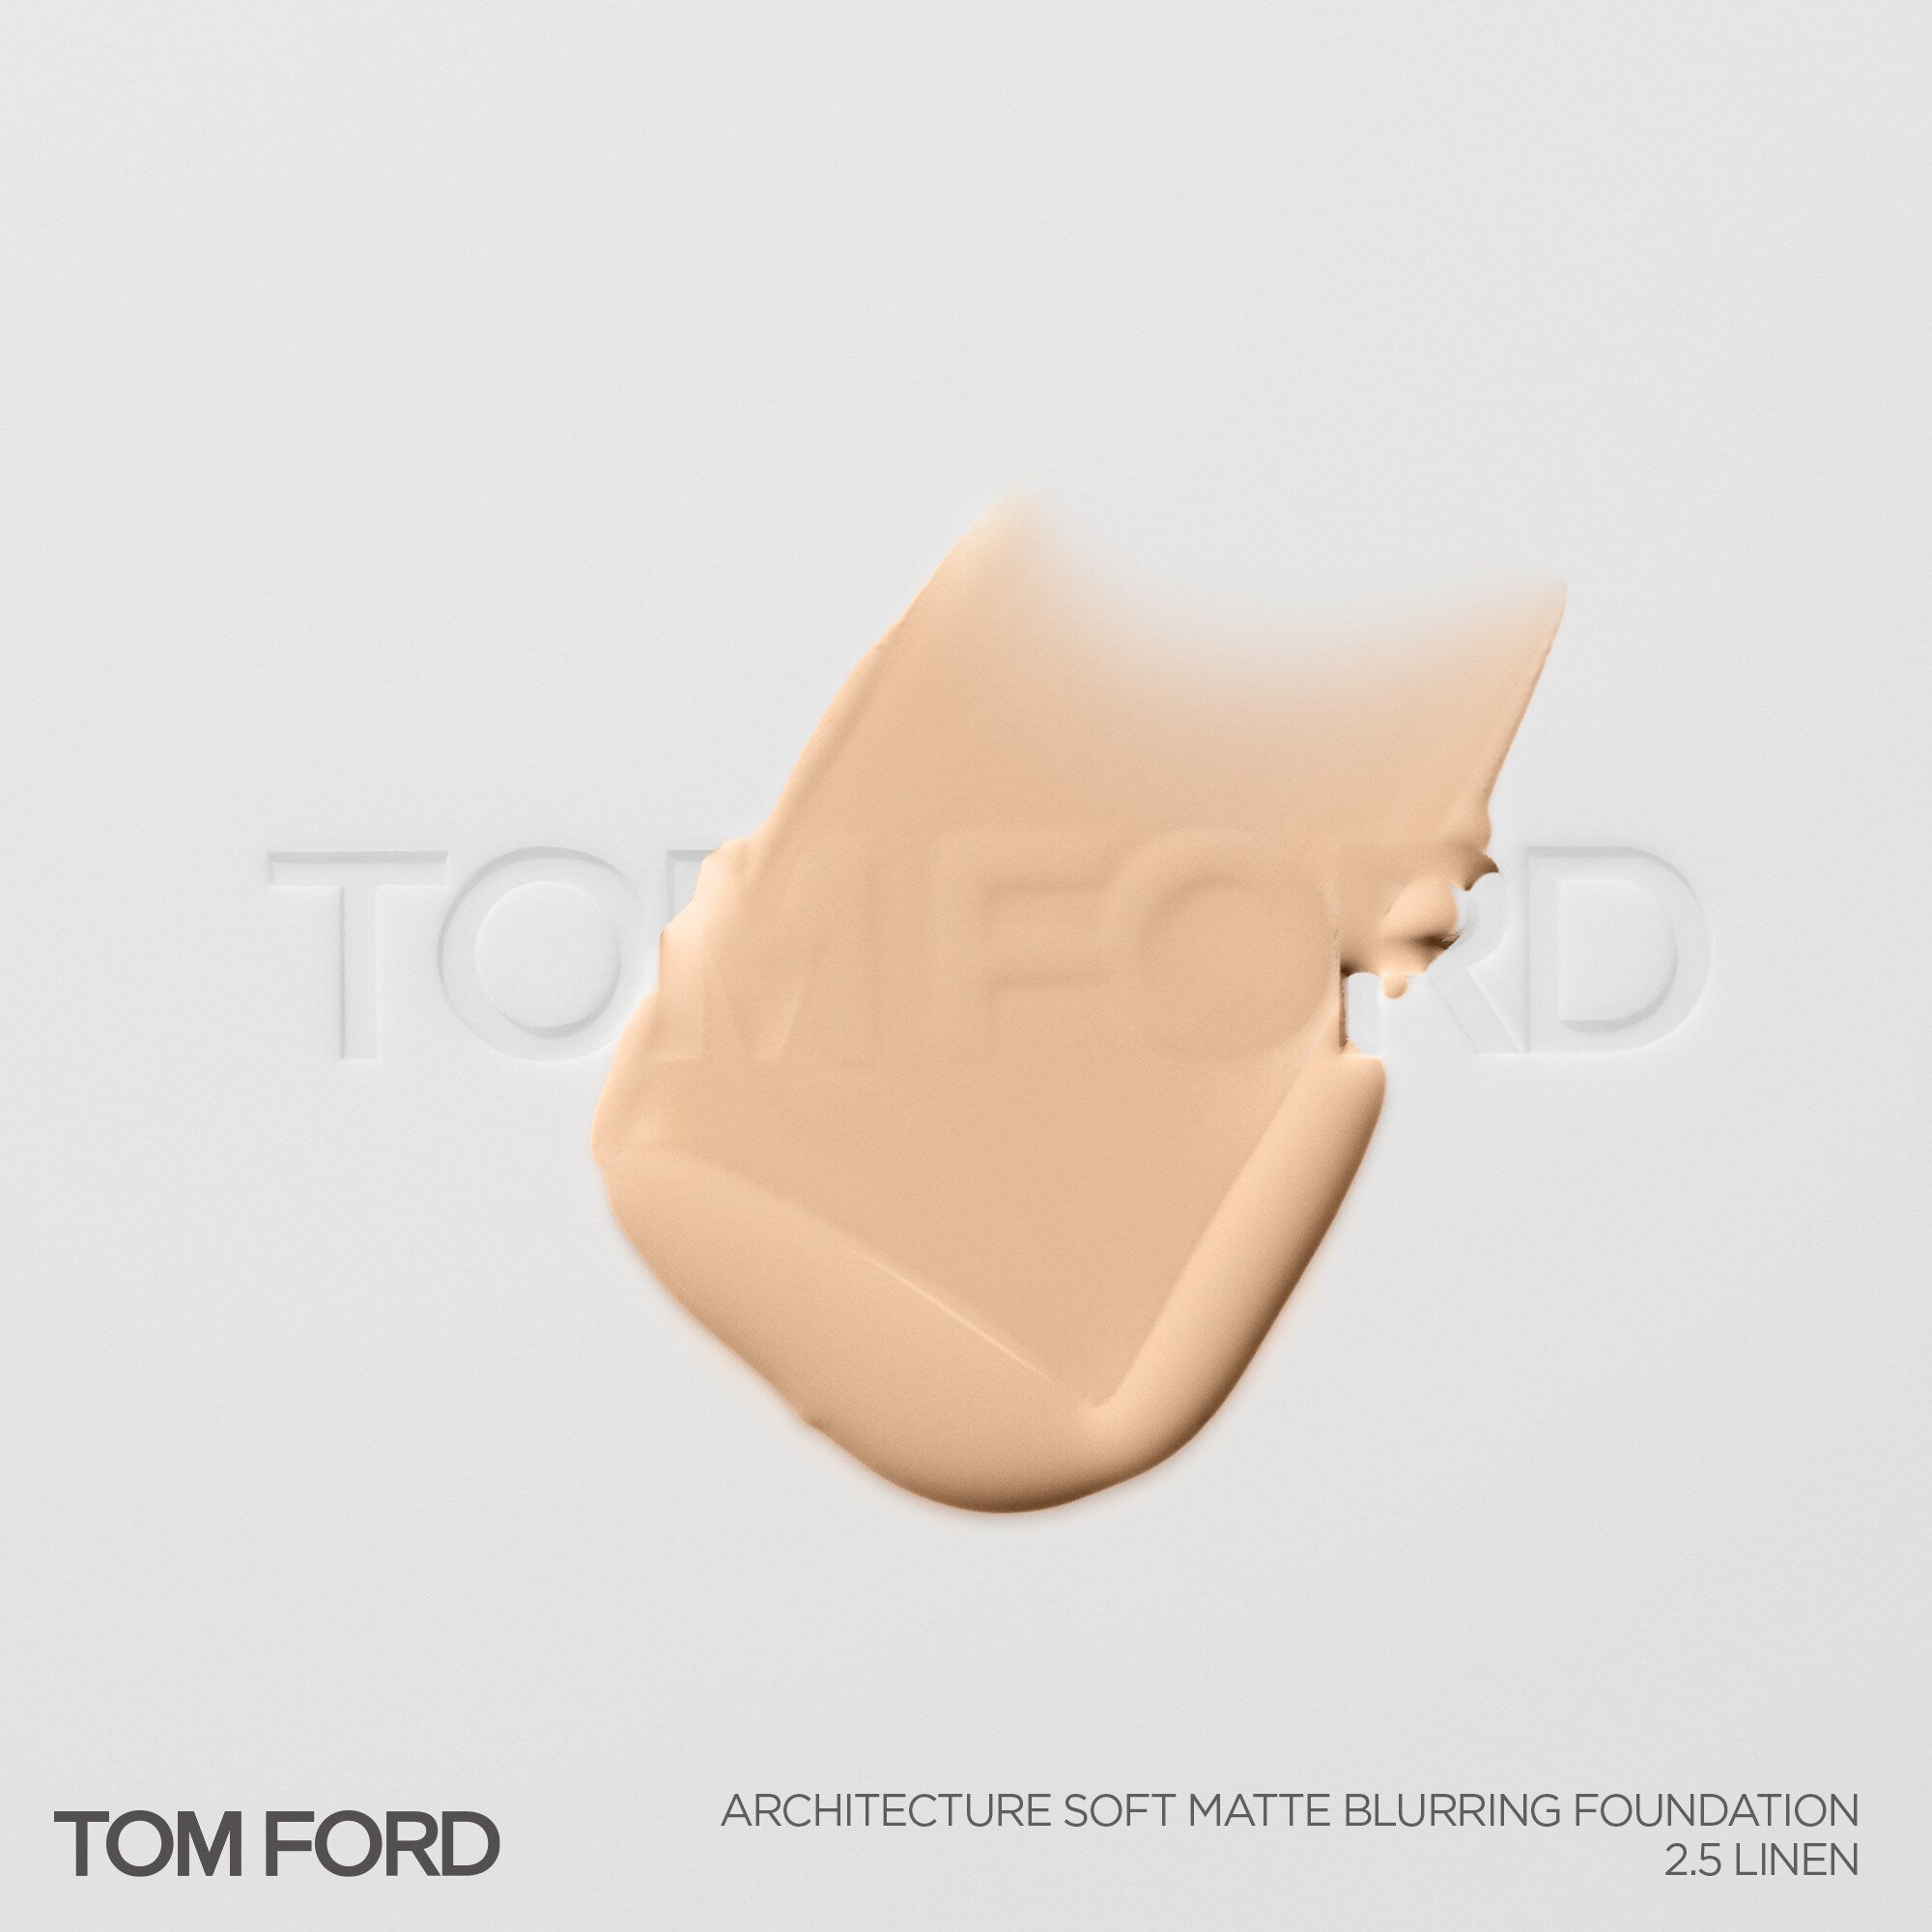 Kem Nền TOM FORD Architecture Soft Matte Foundation #2.5 Linen